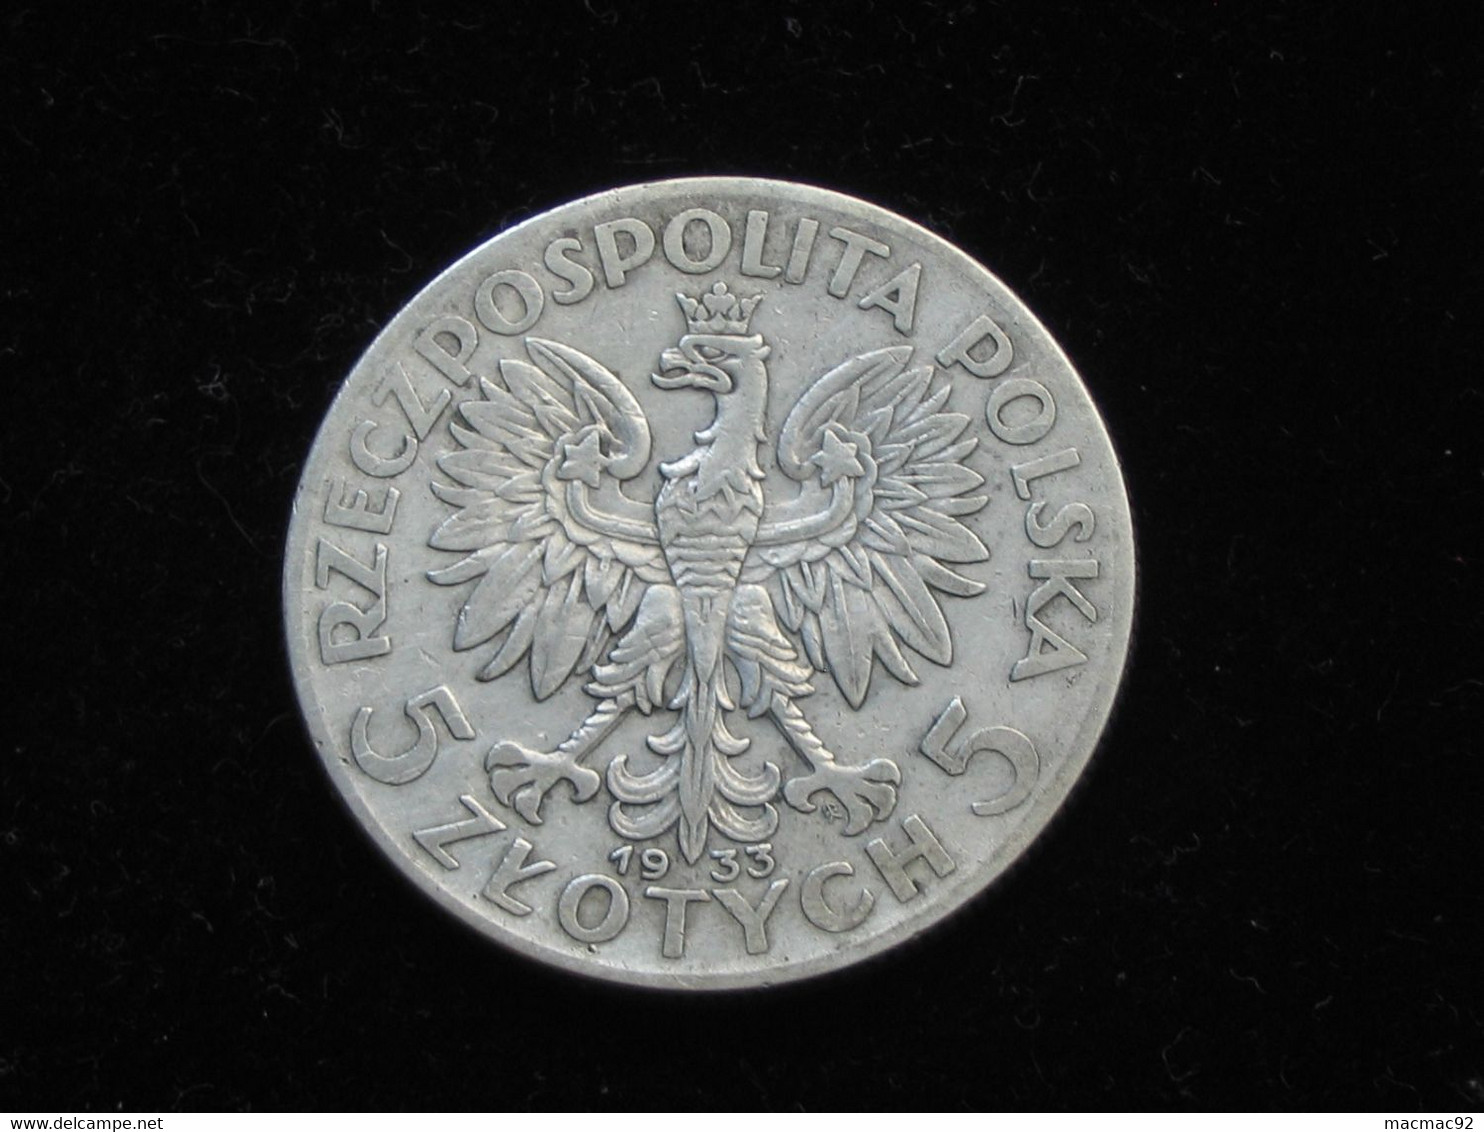 Pologne - Polska -5  Zlotych - 1933  - Monnaie En Argent    **** EN ACHAT IMMEDIAT **** - Poland